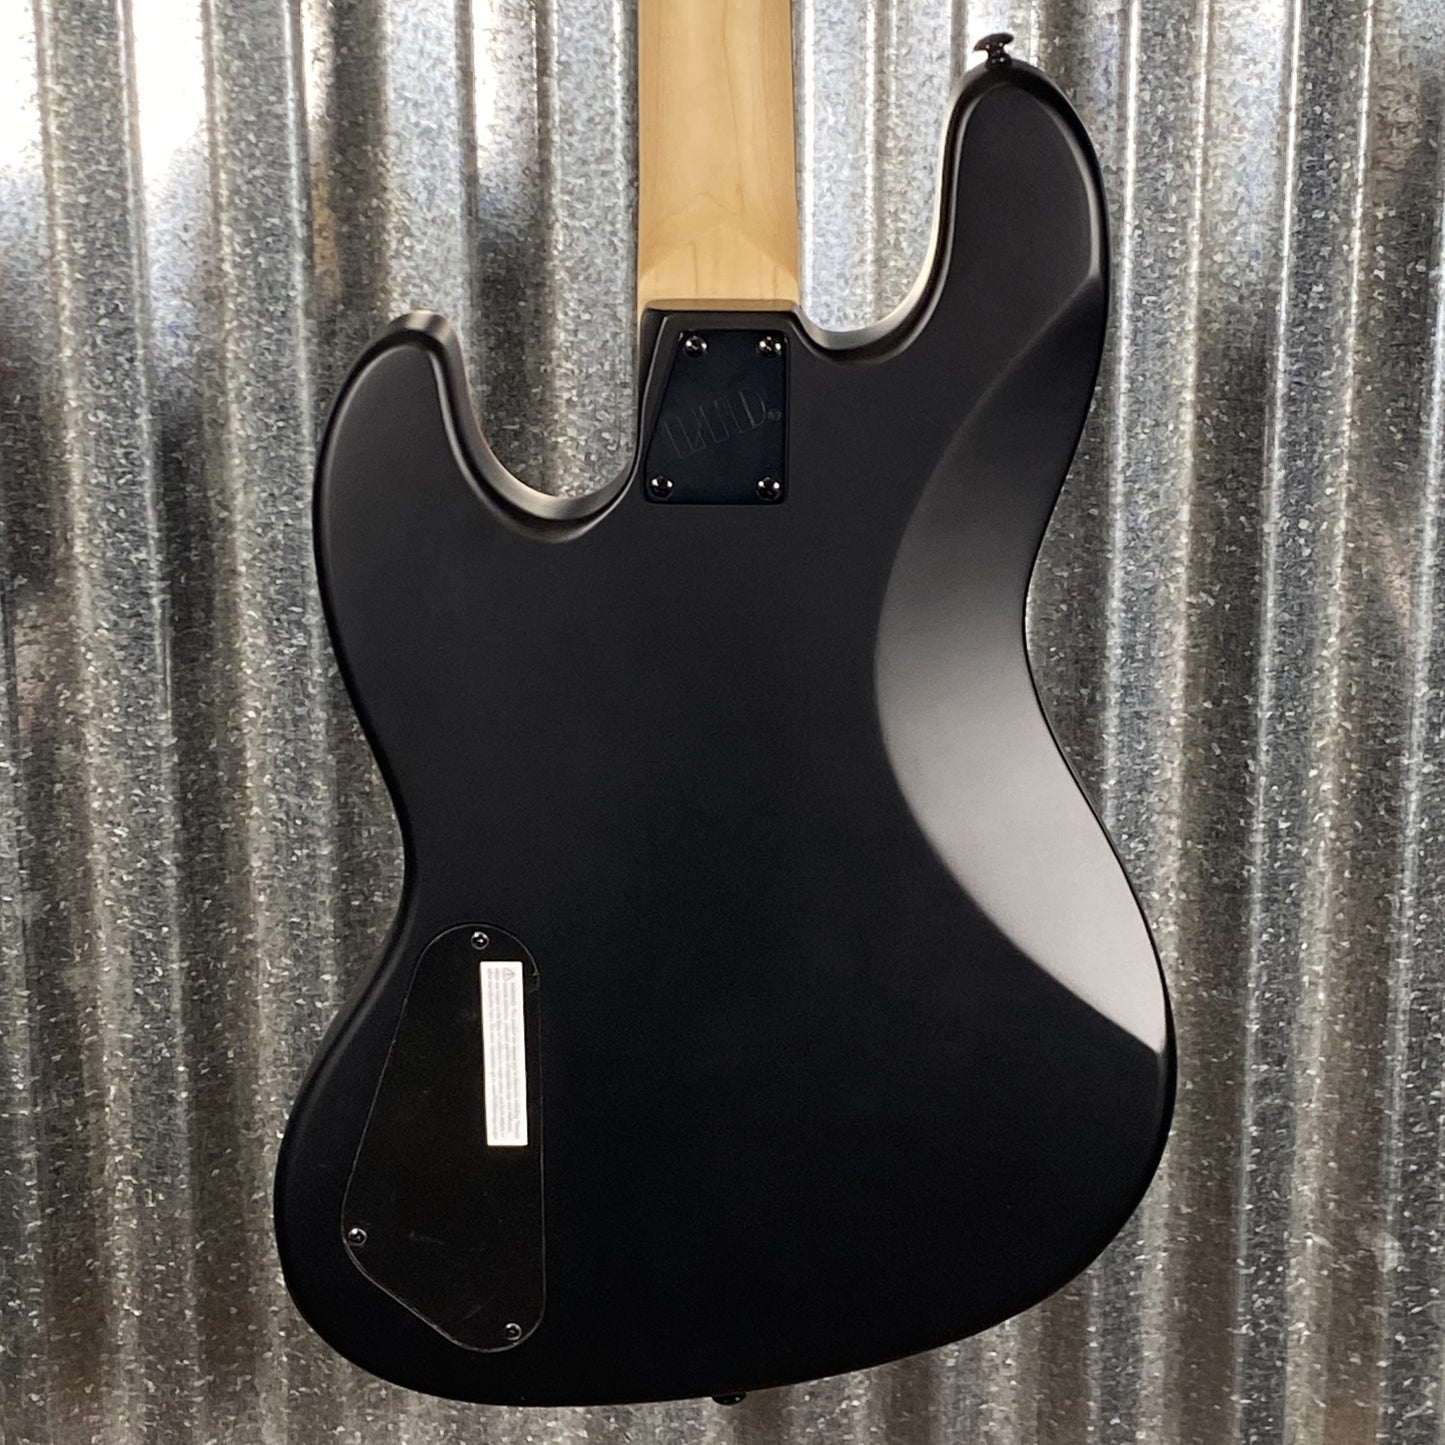 ESP LTD FBJ-400 Frank Bello 4 String Bass EMG PJ Black Satin #0442 Used